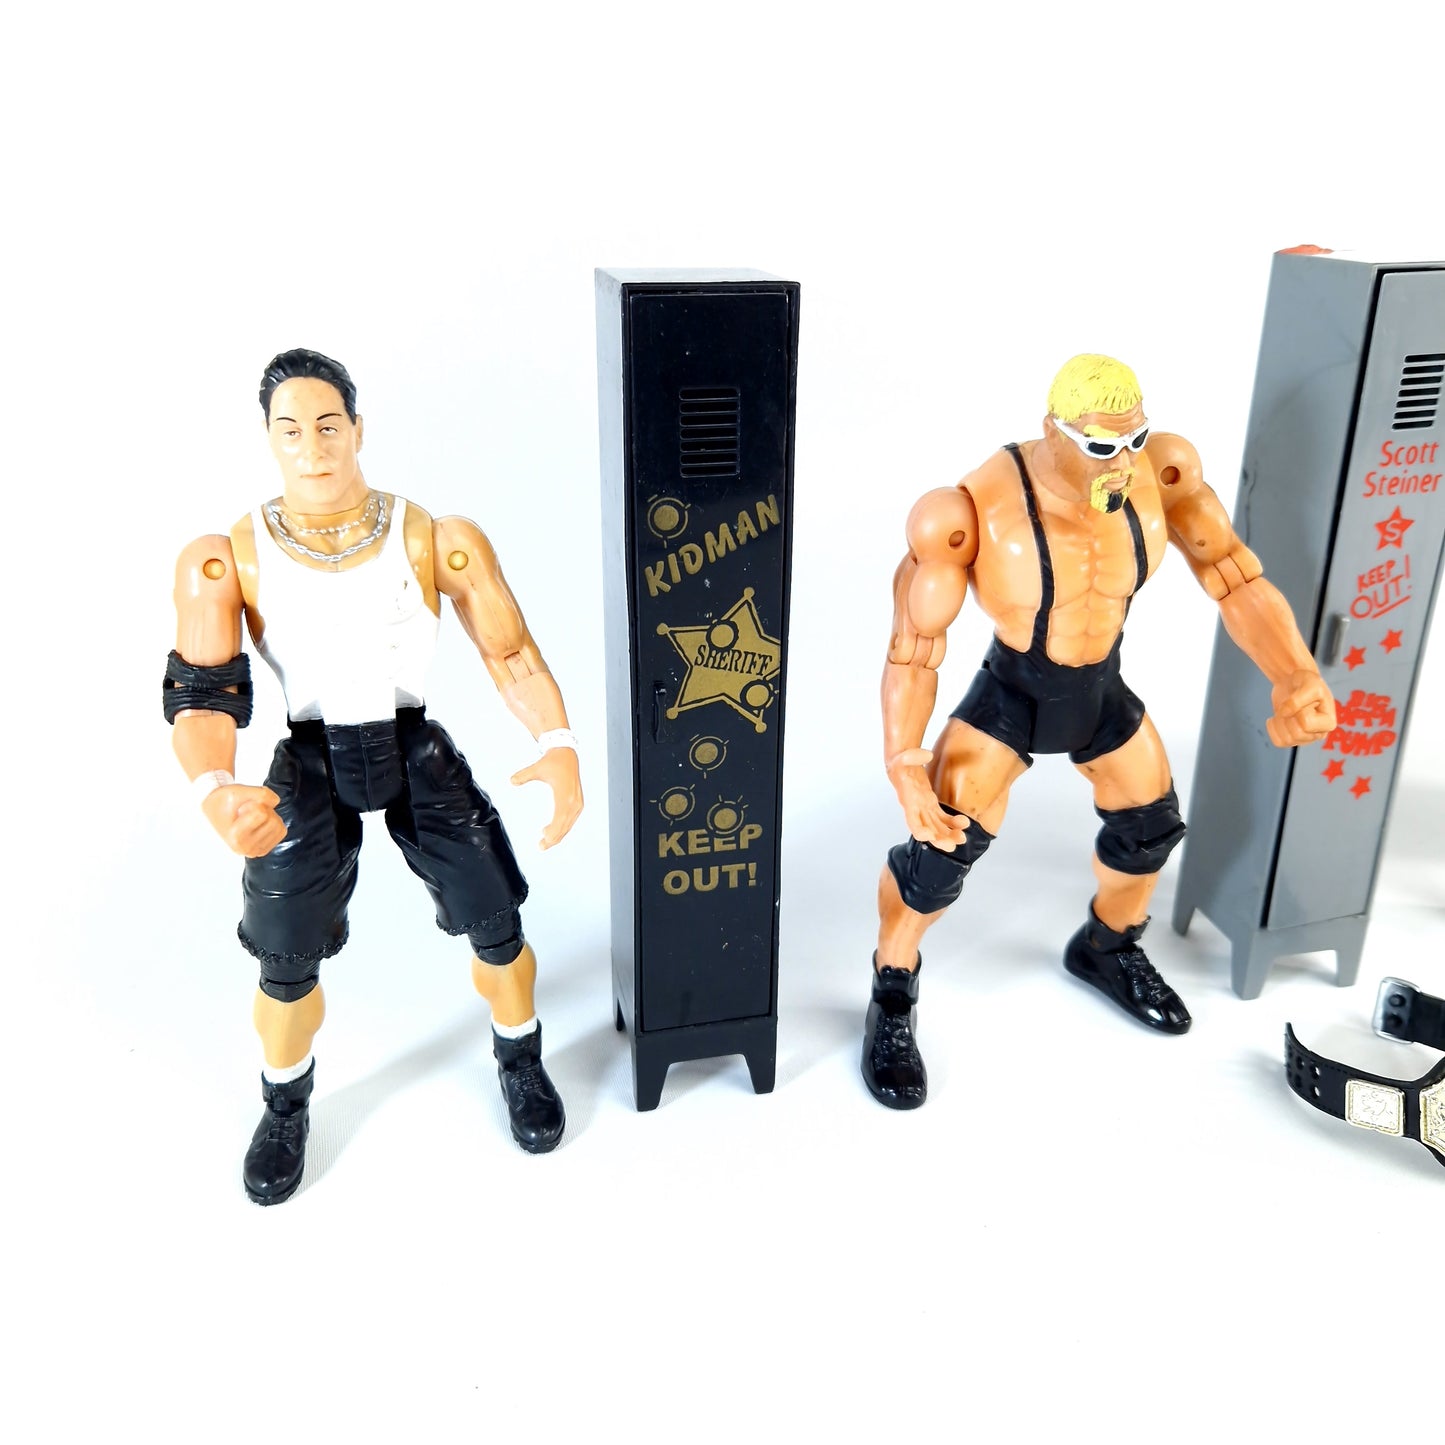 WCW TOYBIZ ☆ Nitro Champions 2 Wrestling Figure Playset Steiner Vicious Kidman Vivid 2001 Vintage Figure ☆ Loose